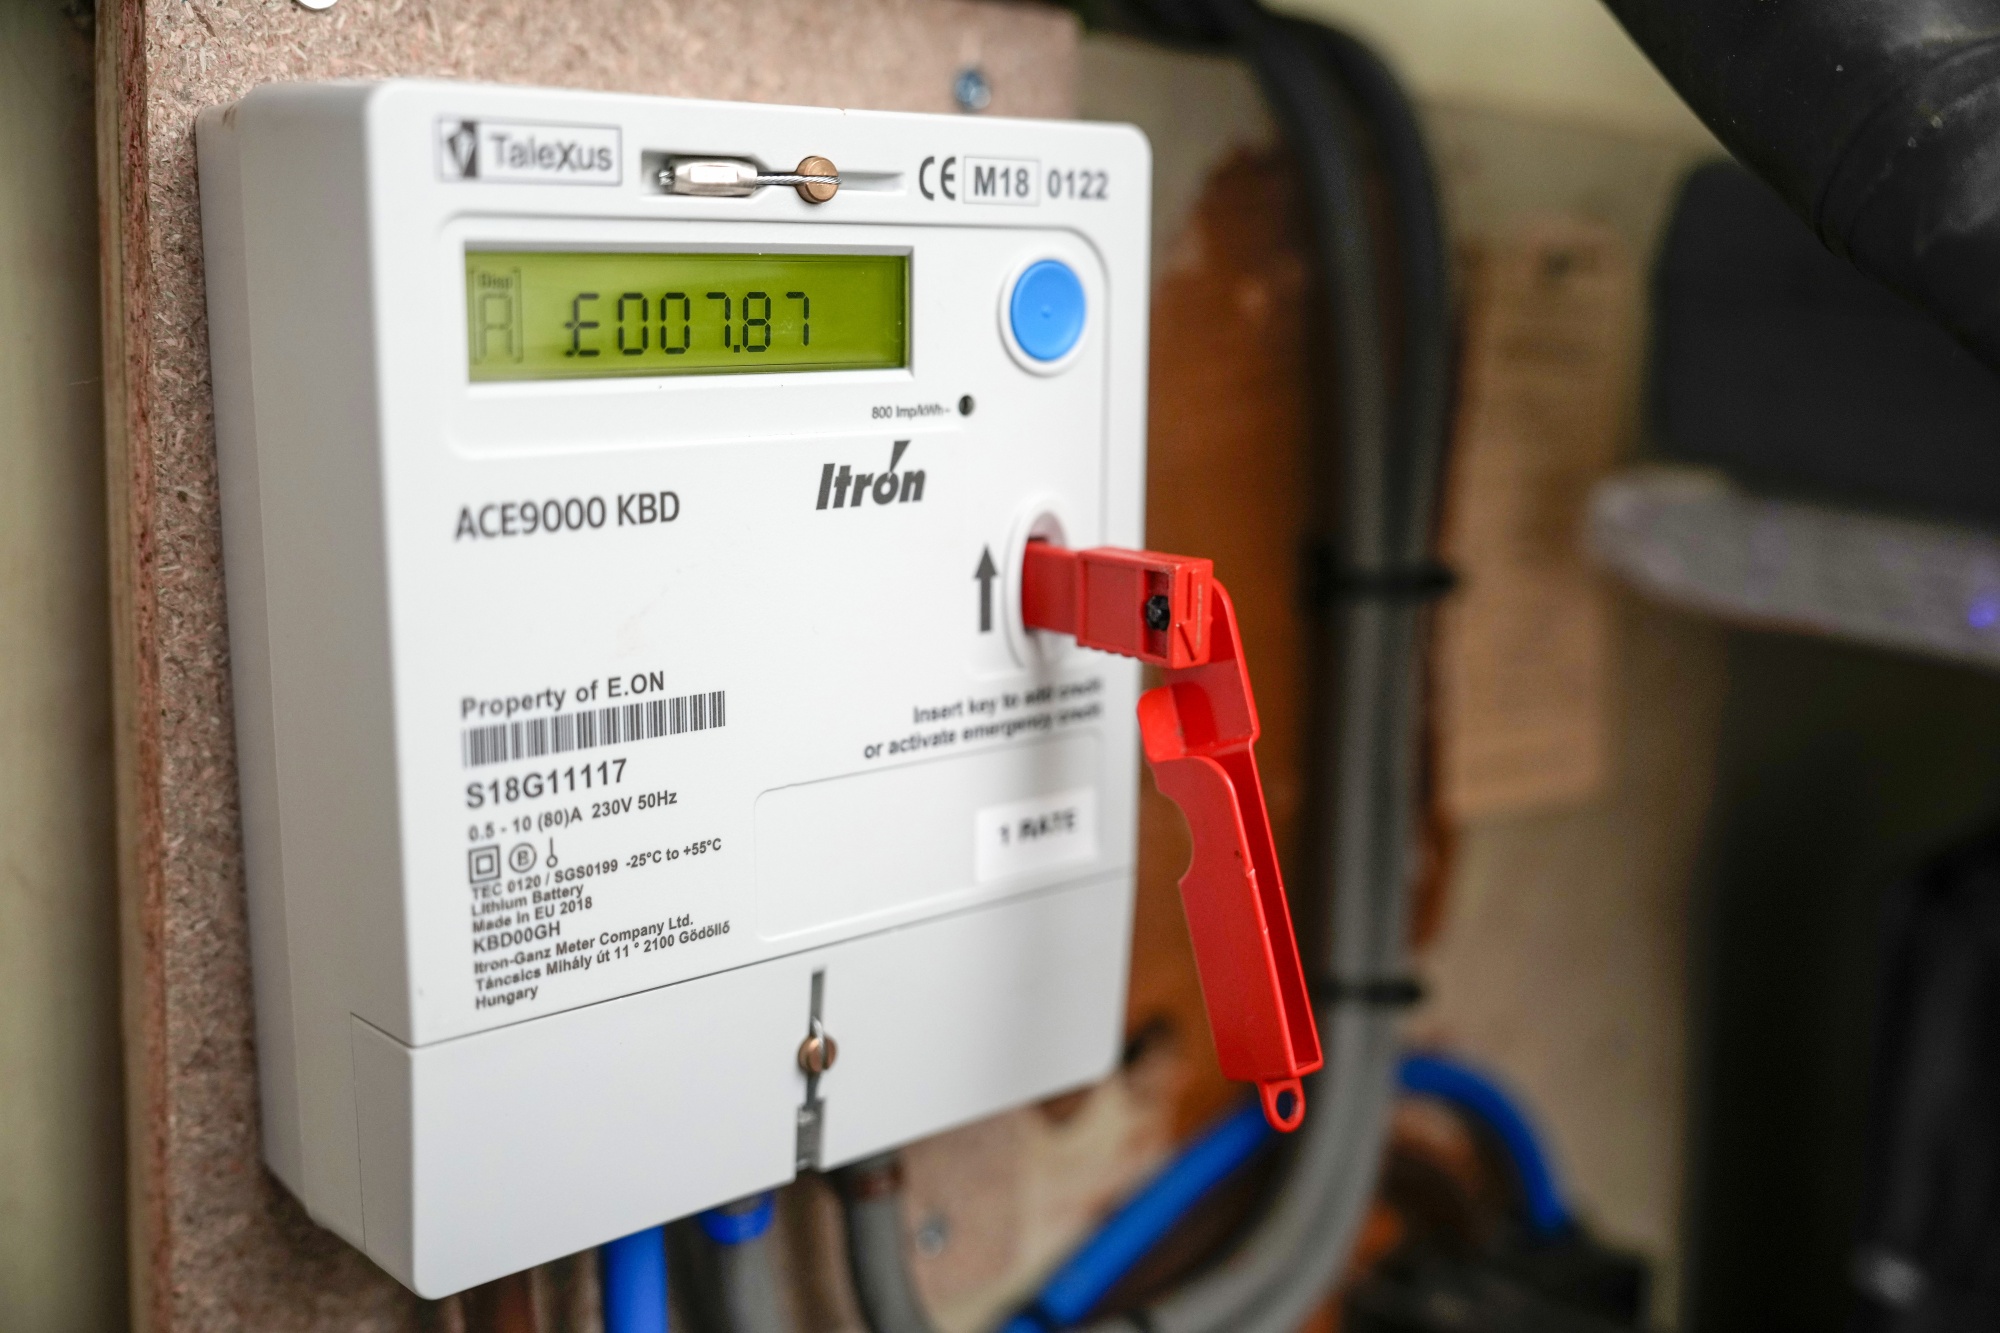 boog Samenwerking ondernemer UK Energy Bills: Rules for Prepayment Meters Toughened After Backlash -  Bloomberg